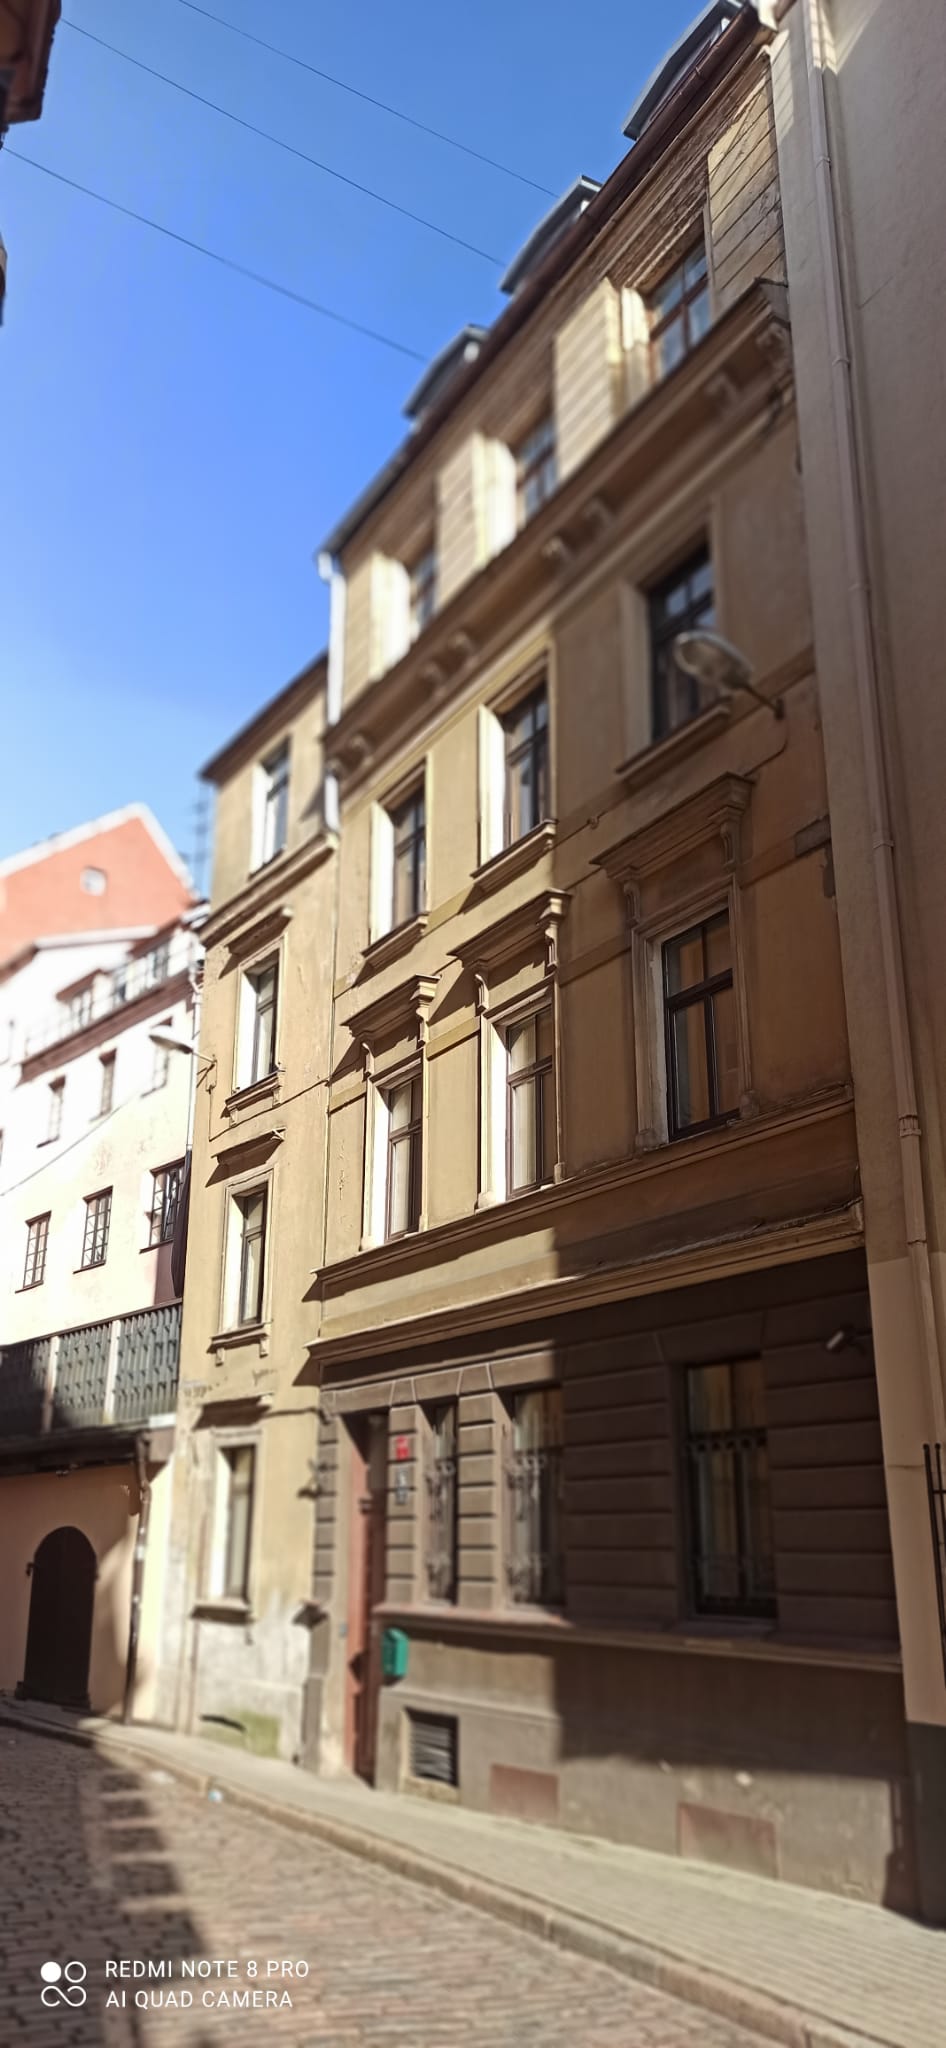 Property building for sale, Rīdzenes street - Image 1